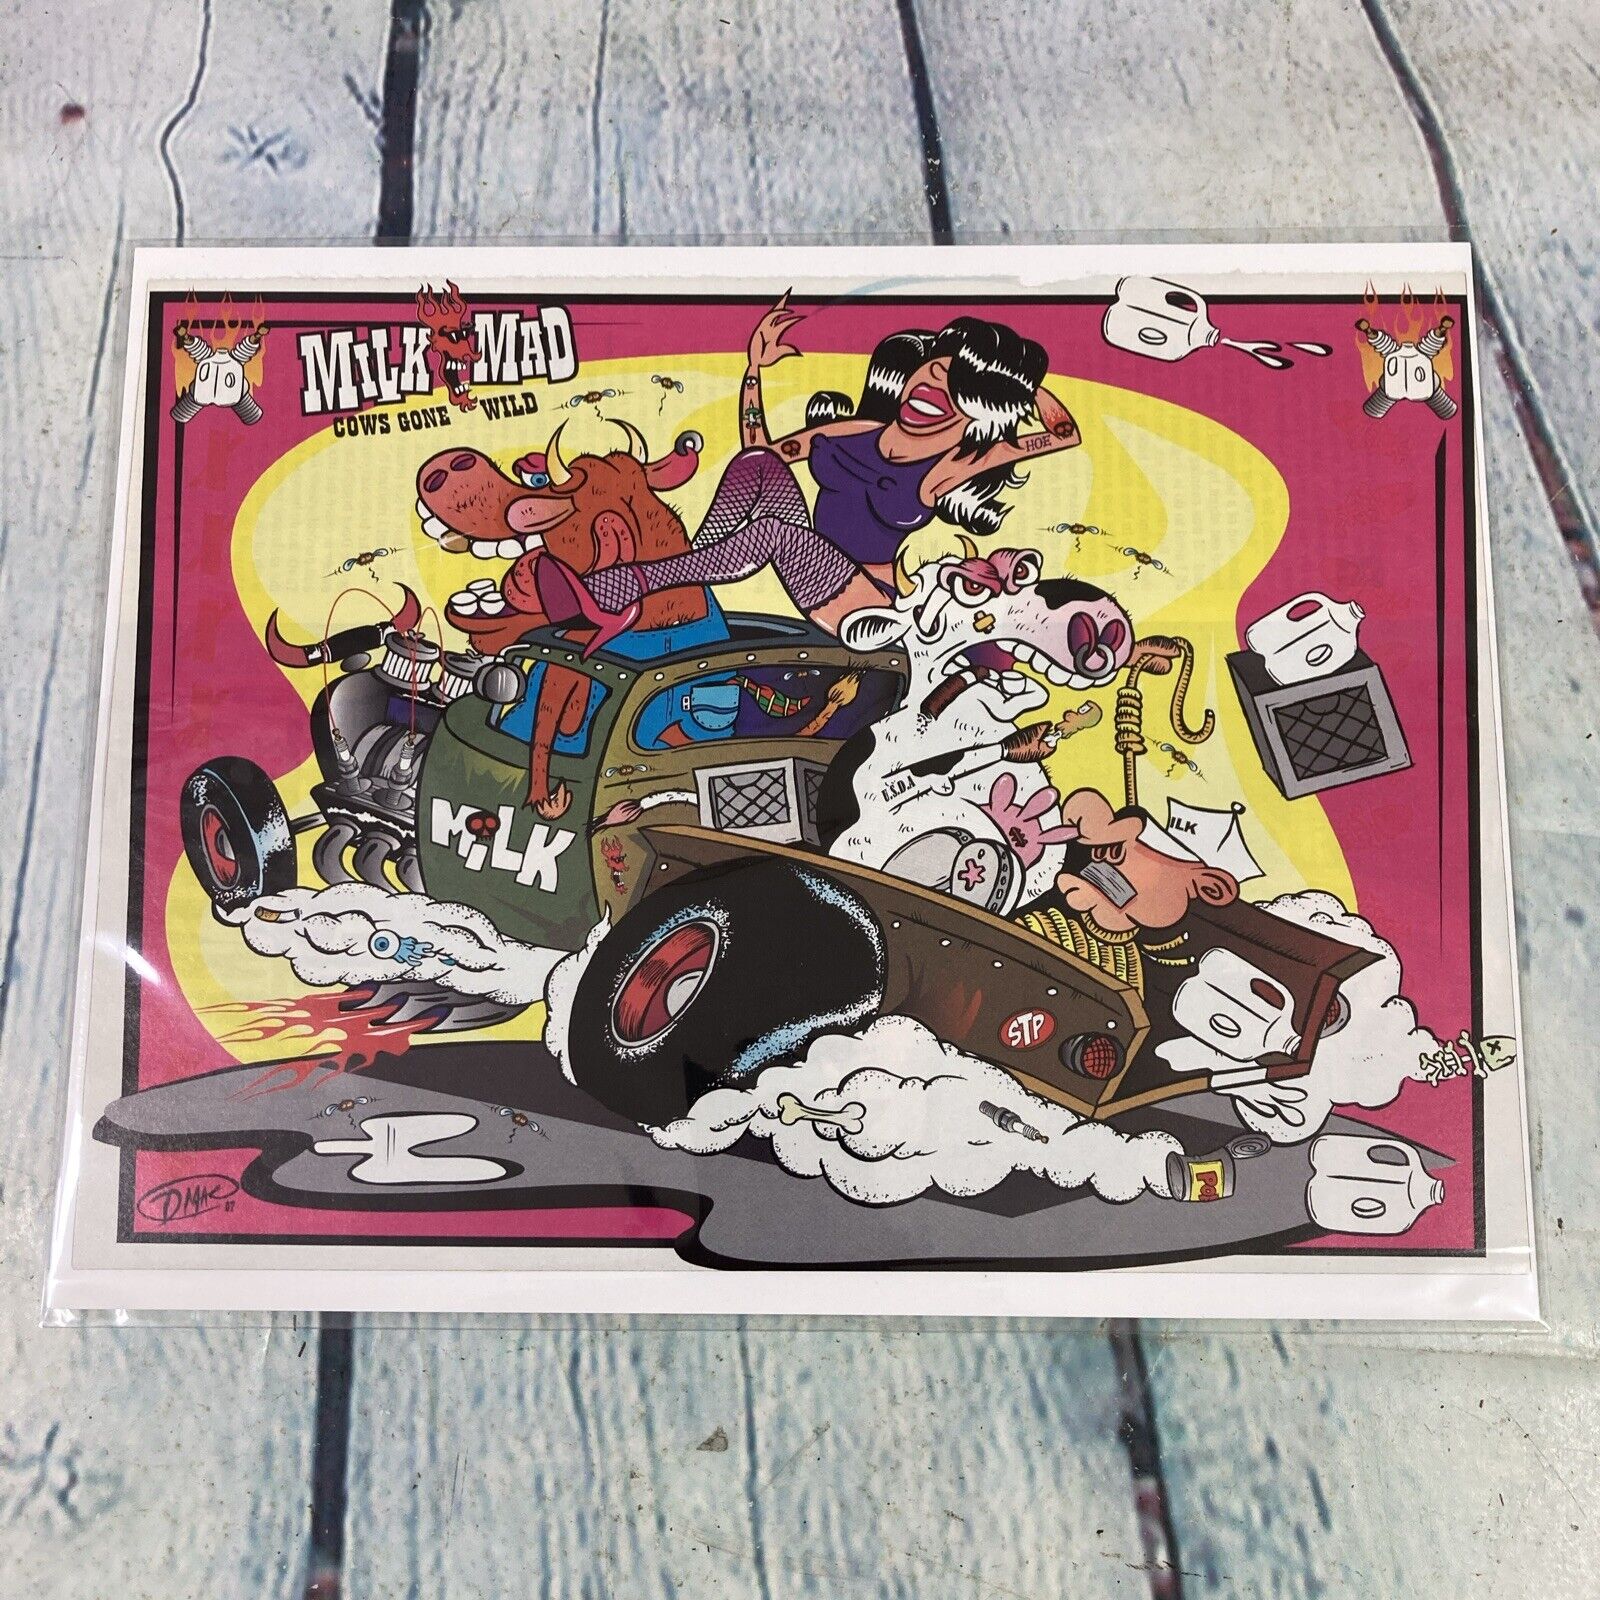 2007 Print Ad/Poster Hot Rod Car Milk Mad Cows Gone Wild Cartoon Art Man Cave